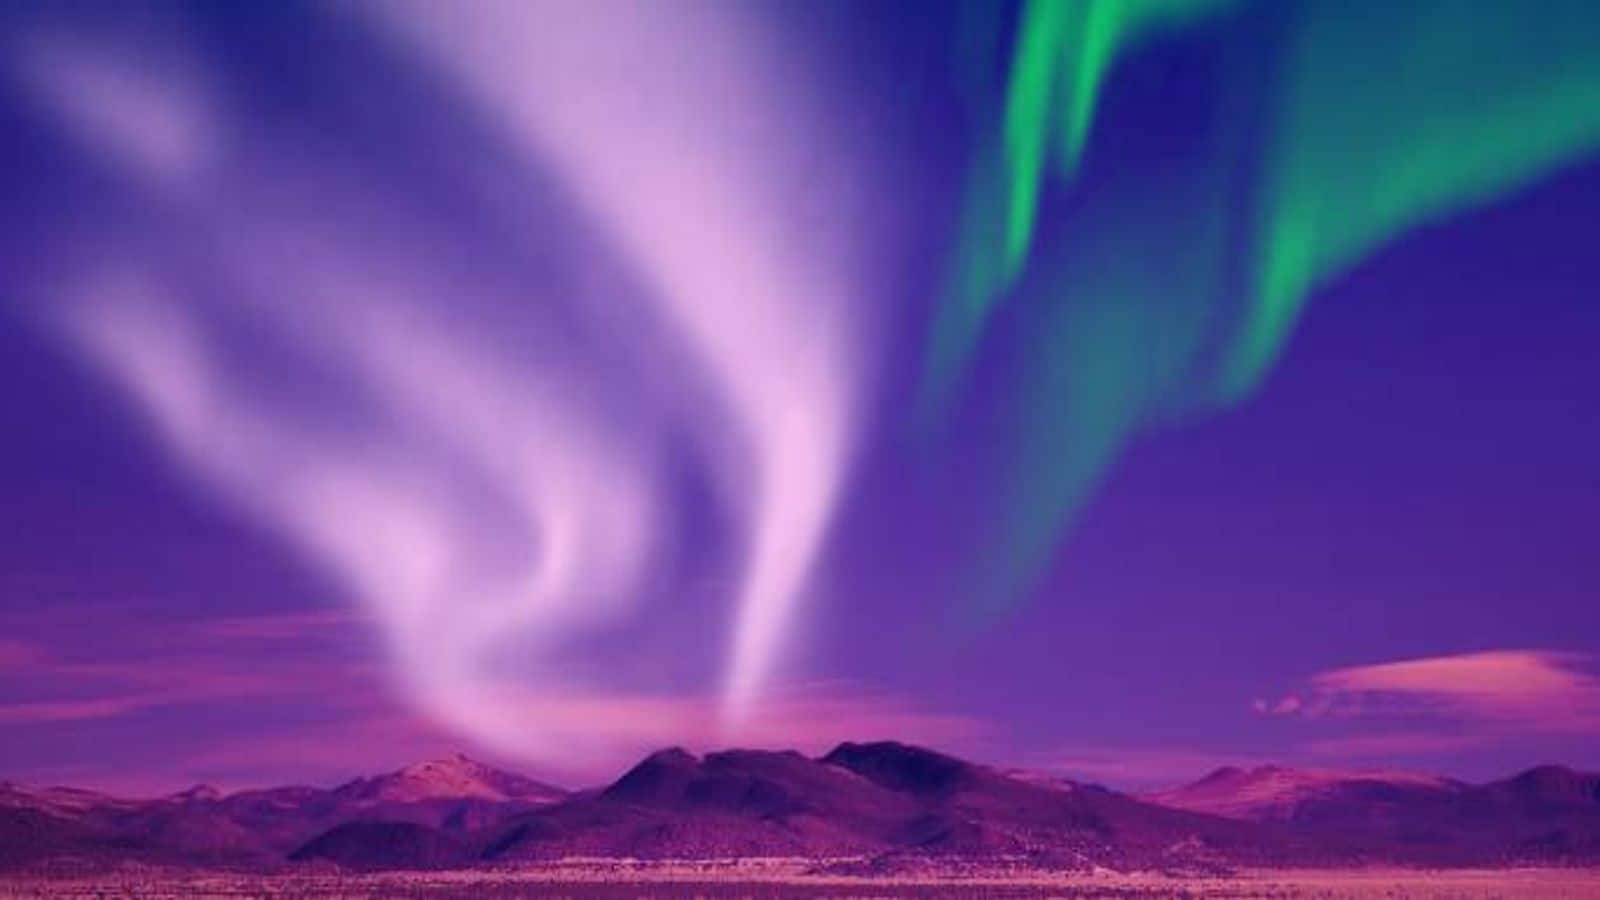 When in Reykjavik, go for an aurora adventure experience